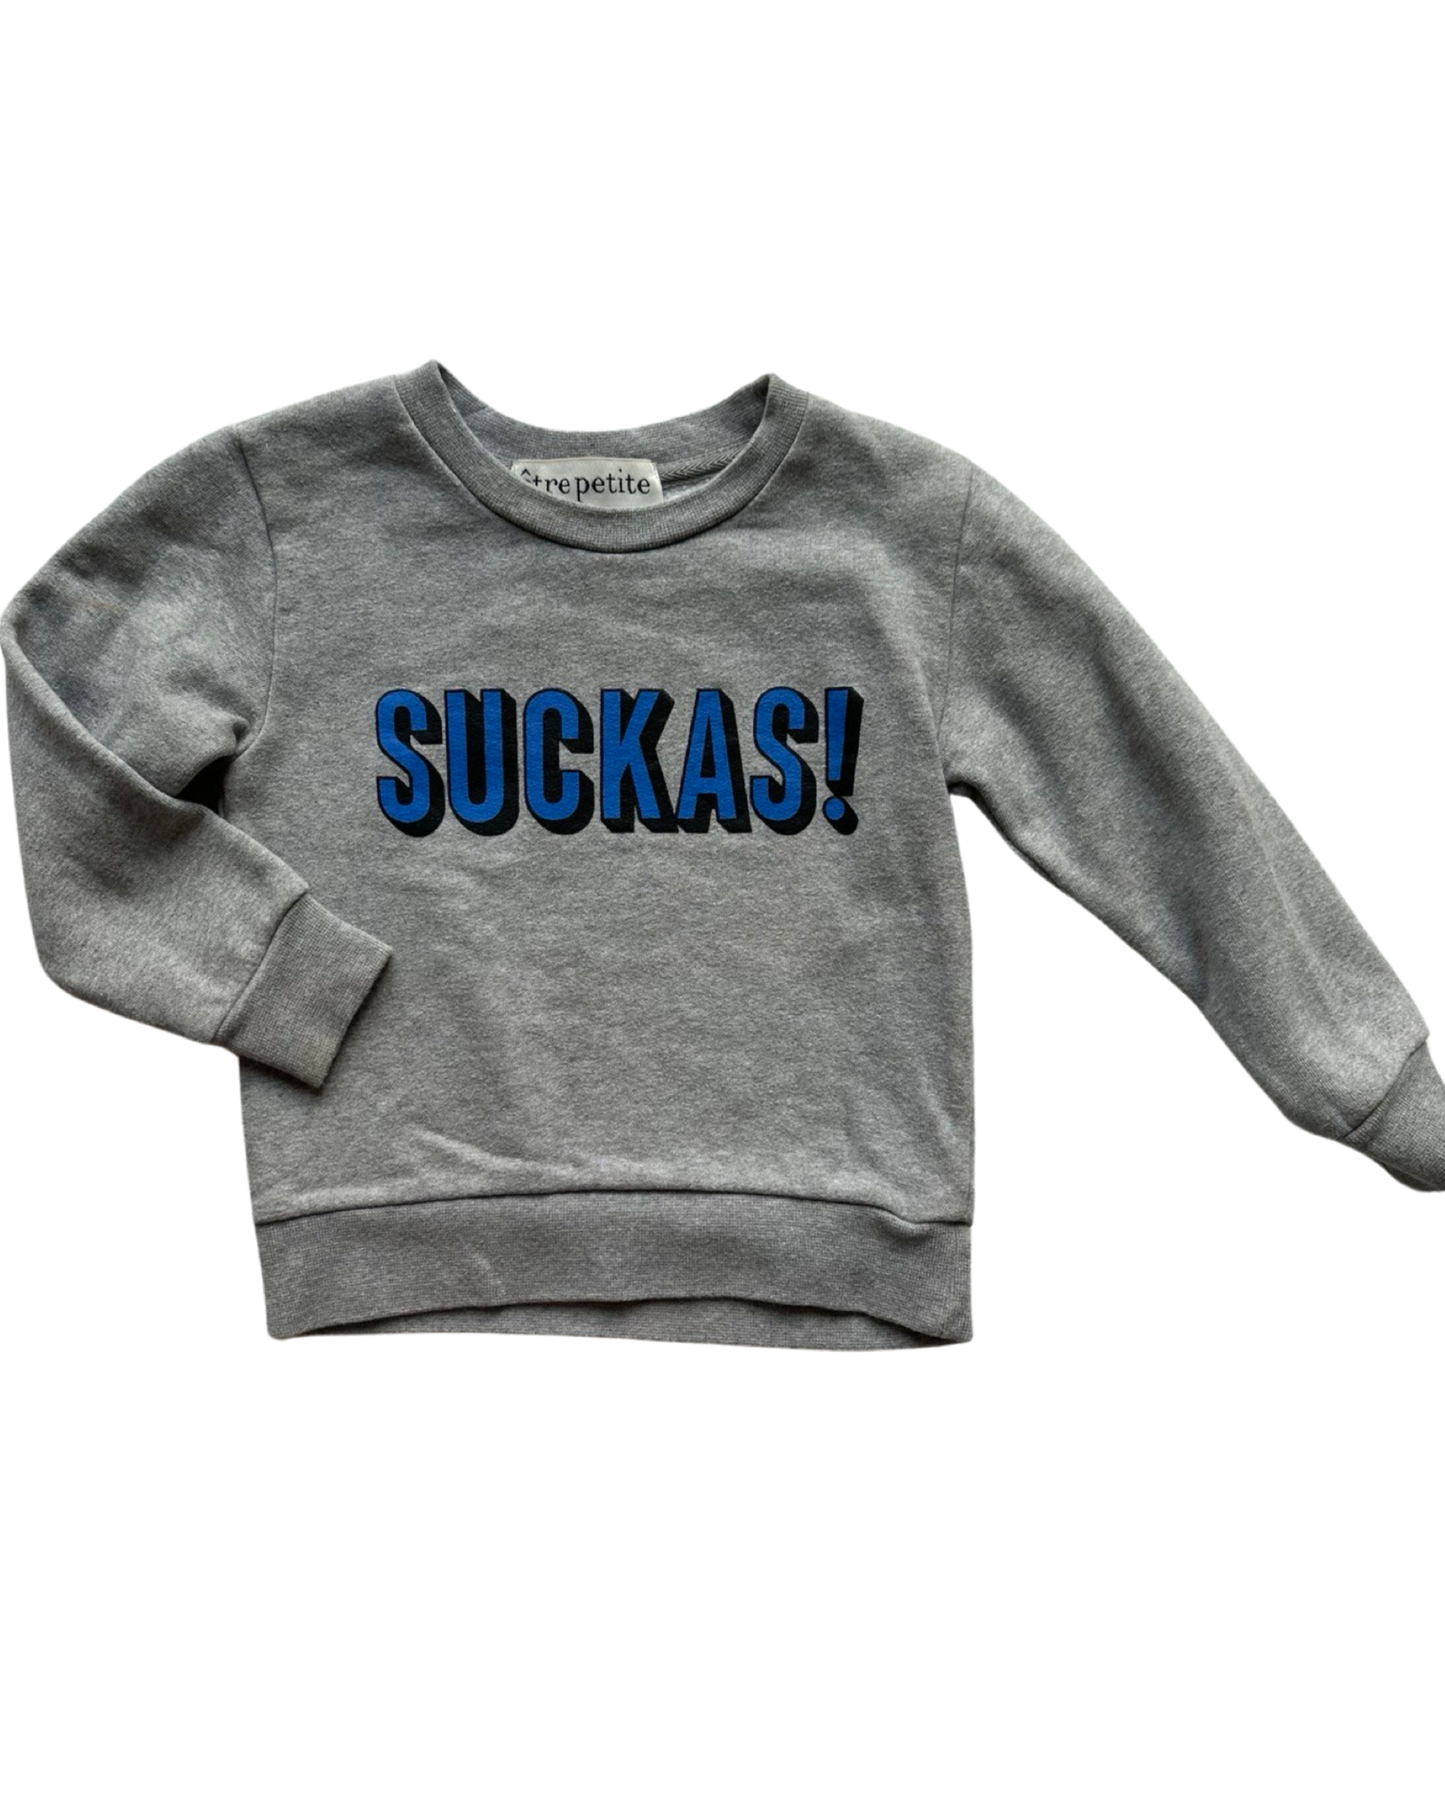 Etre Petite ' Suckas' sweatshirt (2-3yrs)